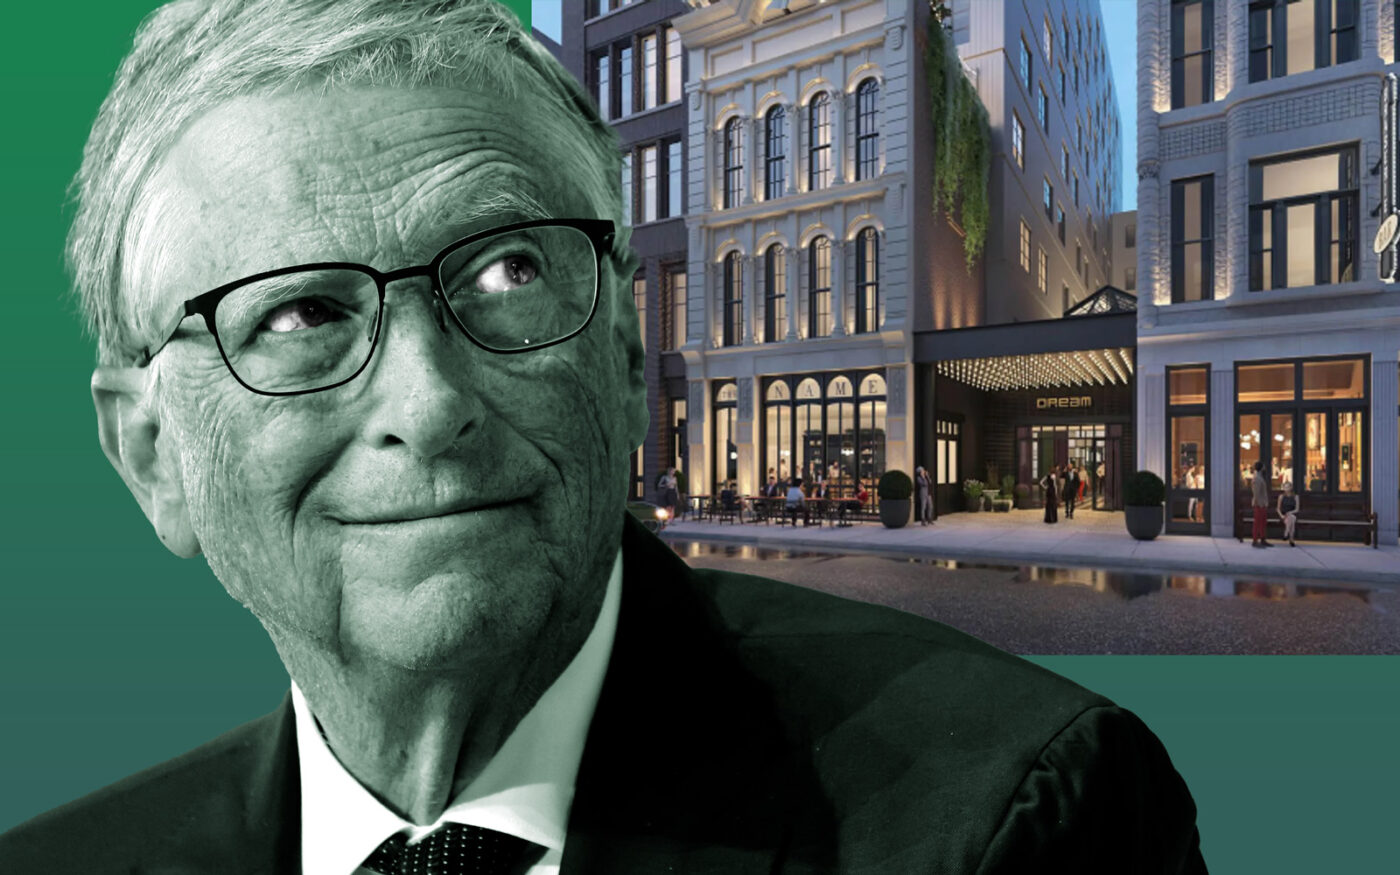 Bill Gates Revealed As Buyer Of Nashville’s Dream Hotel